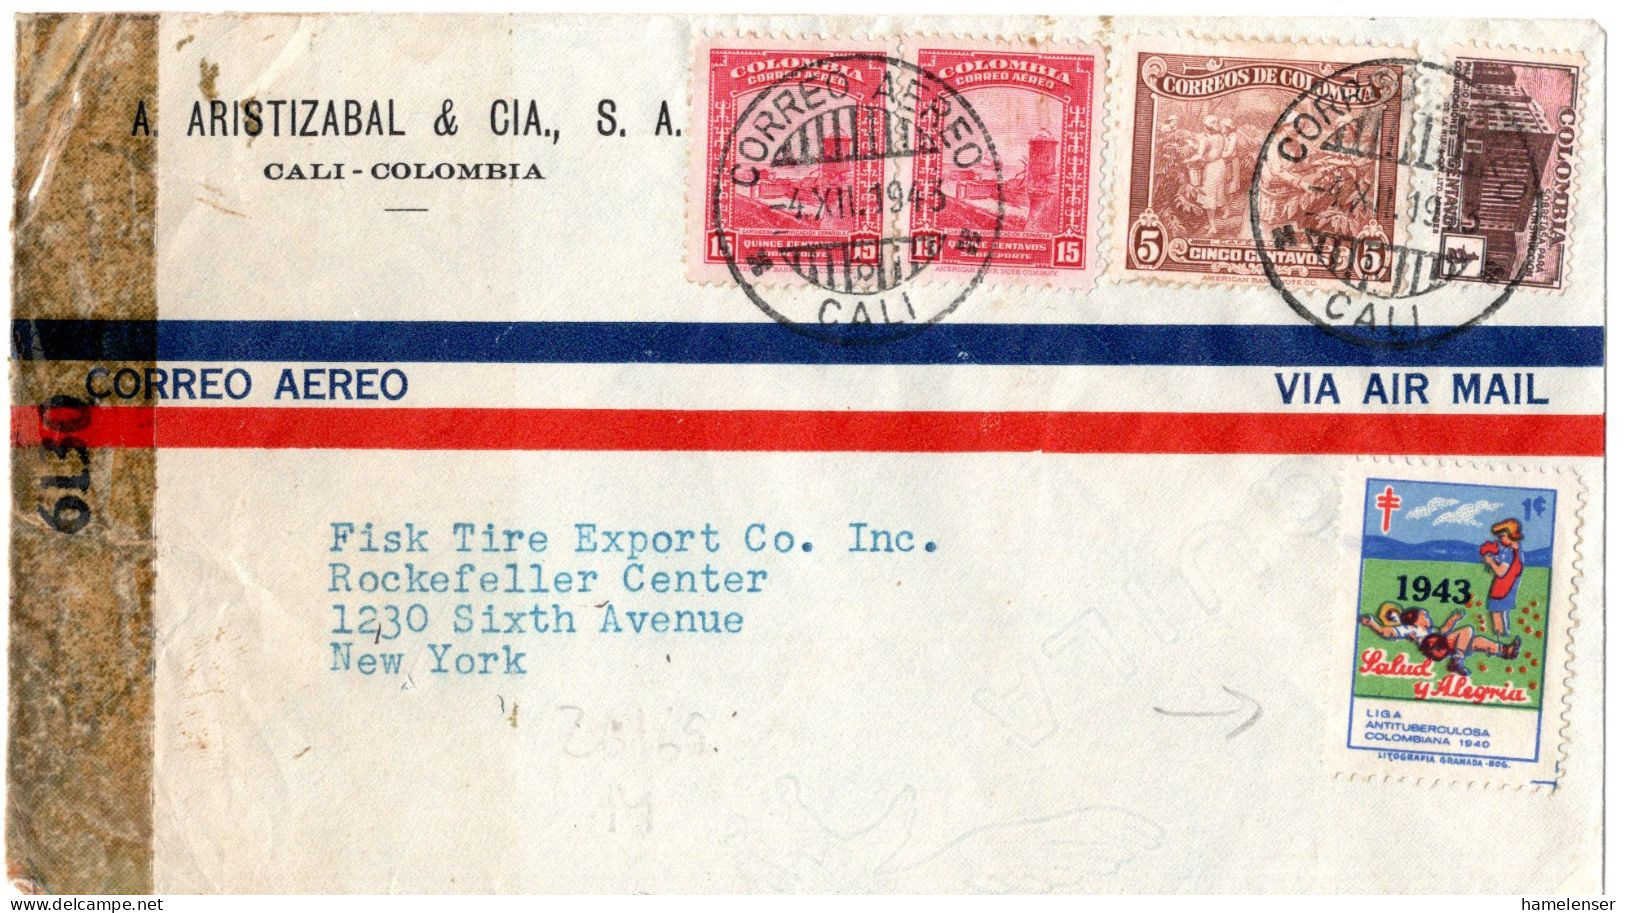 72443 - Kolumbien - 1943 - 2@15c Luftpost MiF A LpBf CALI -> New York, NY (USA), M US-Zensur & Tbc-Aufkleber - Colombie